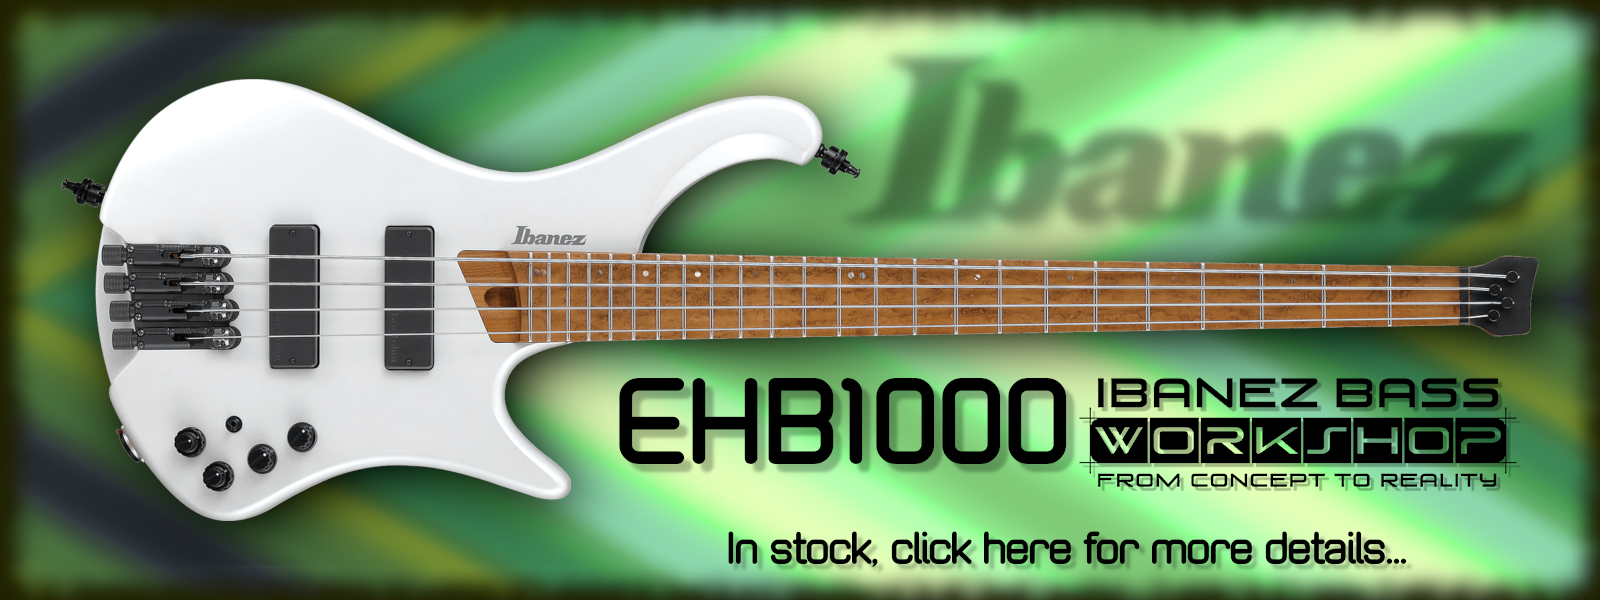 ibanez-ehb1000-bass-banner